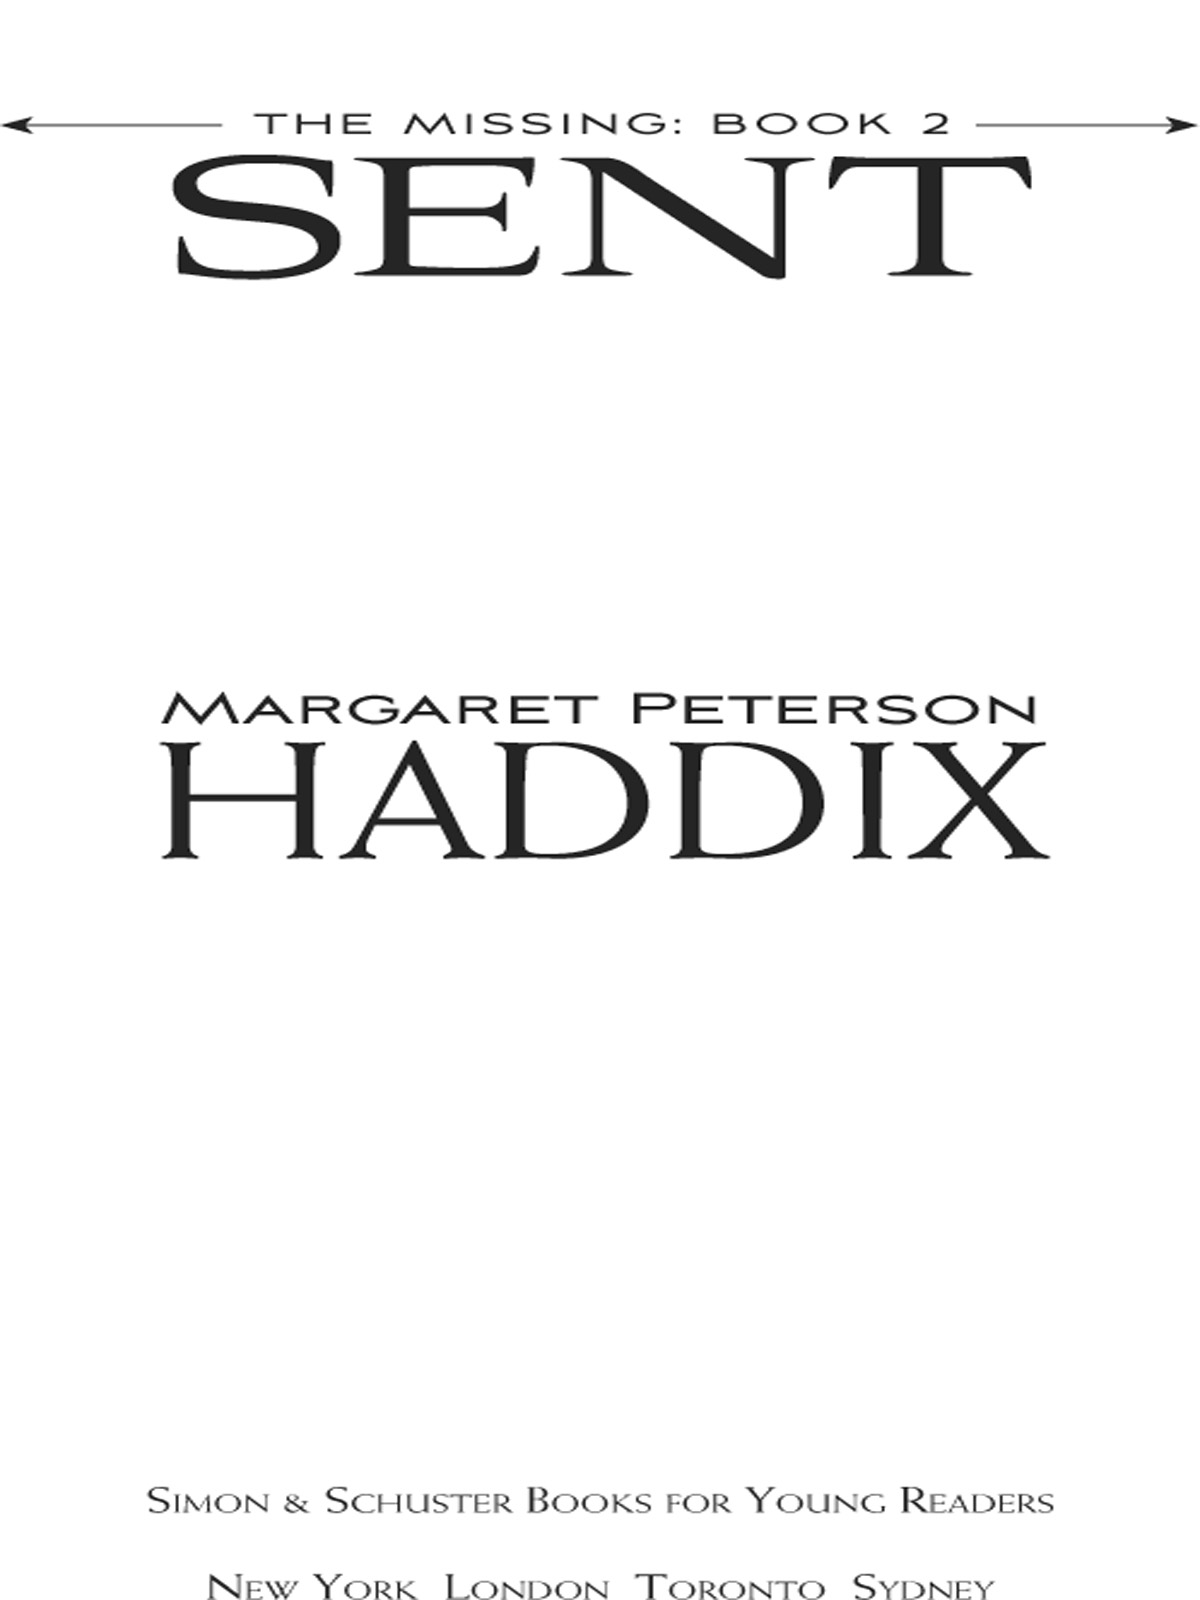 Sent (2009) by Margaret Peterson Haddix